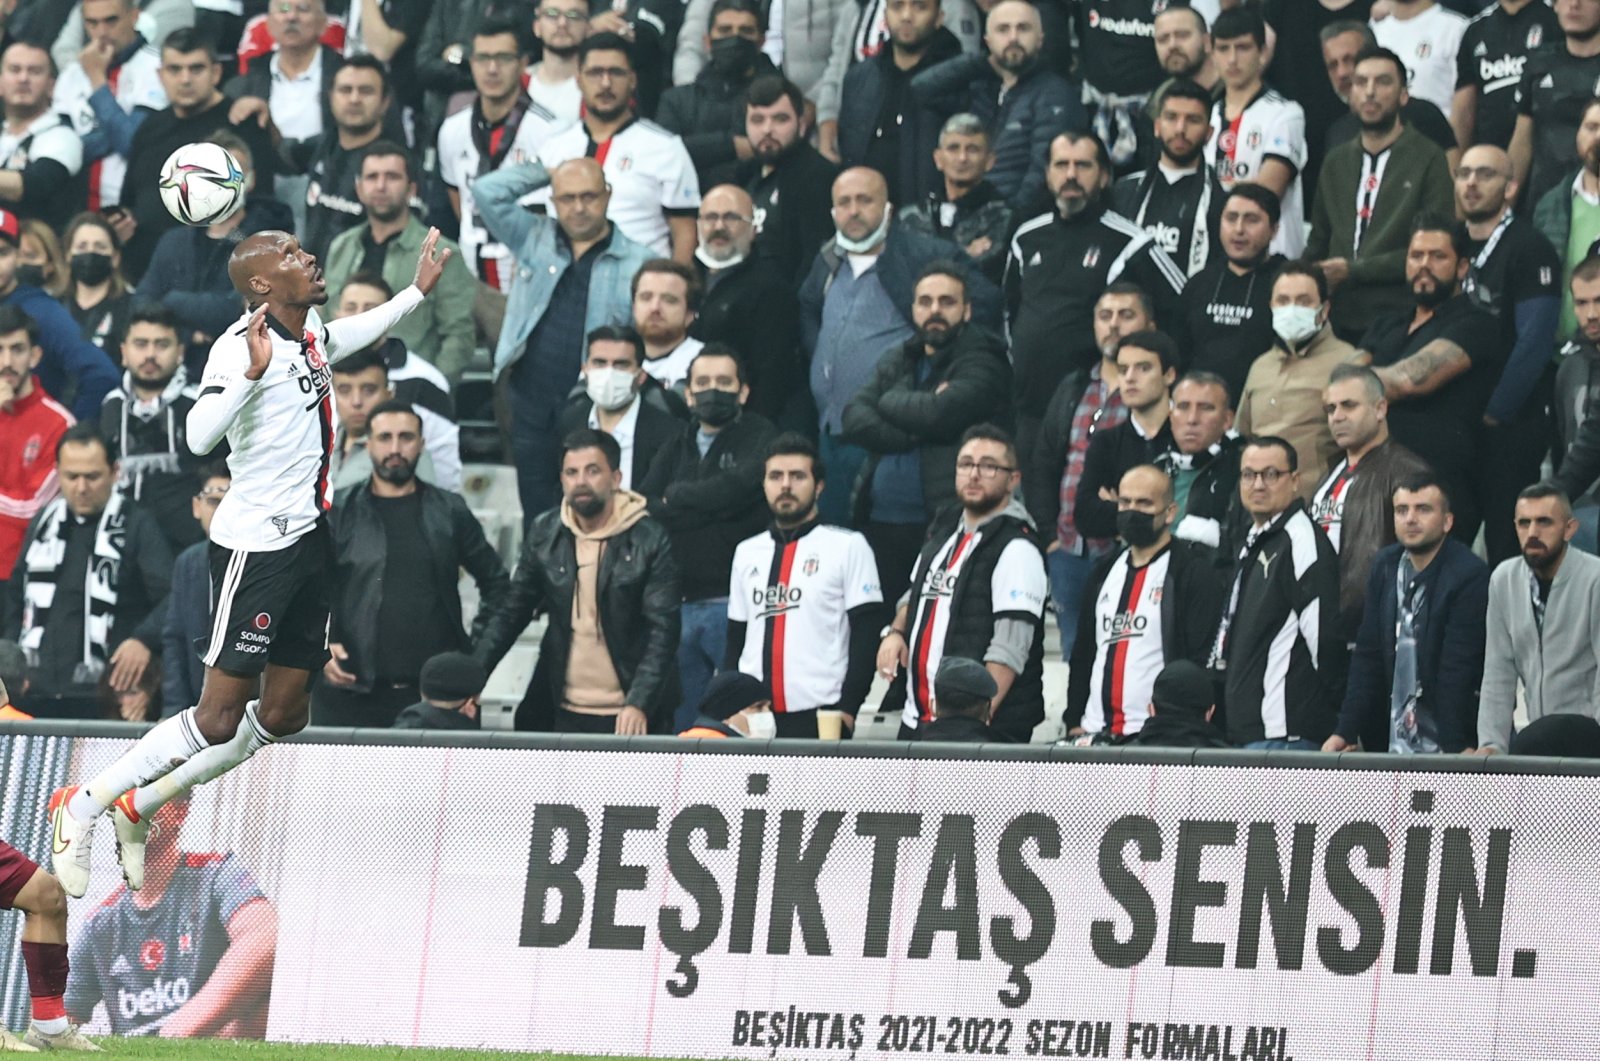 Beşiktaş's Atiba Hutchinson tries to control the ball as the crowd looks on during a Süper Lig match against Trabzonspor, Istanbul, Turkey, Nov. 6, 2021. (AA Photo)